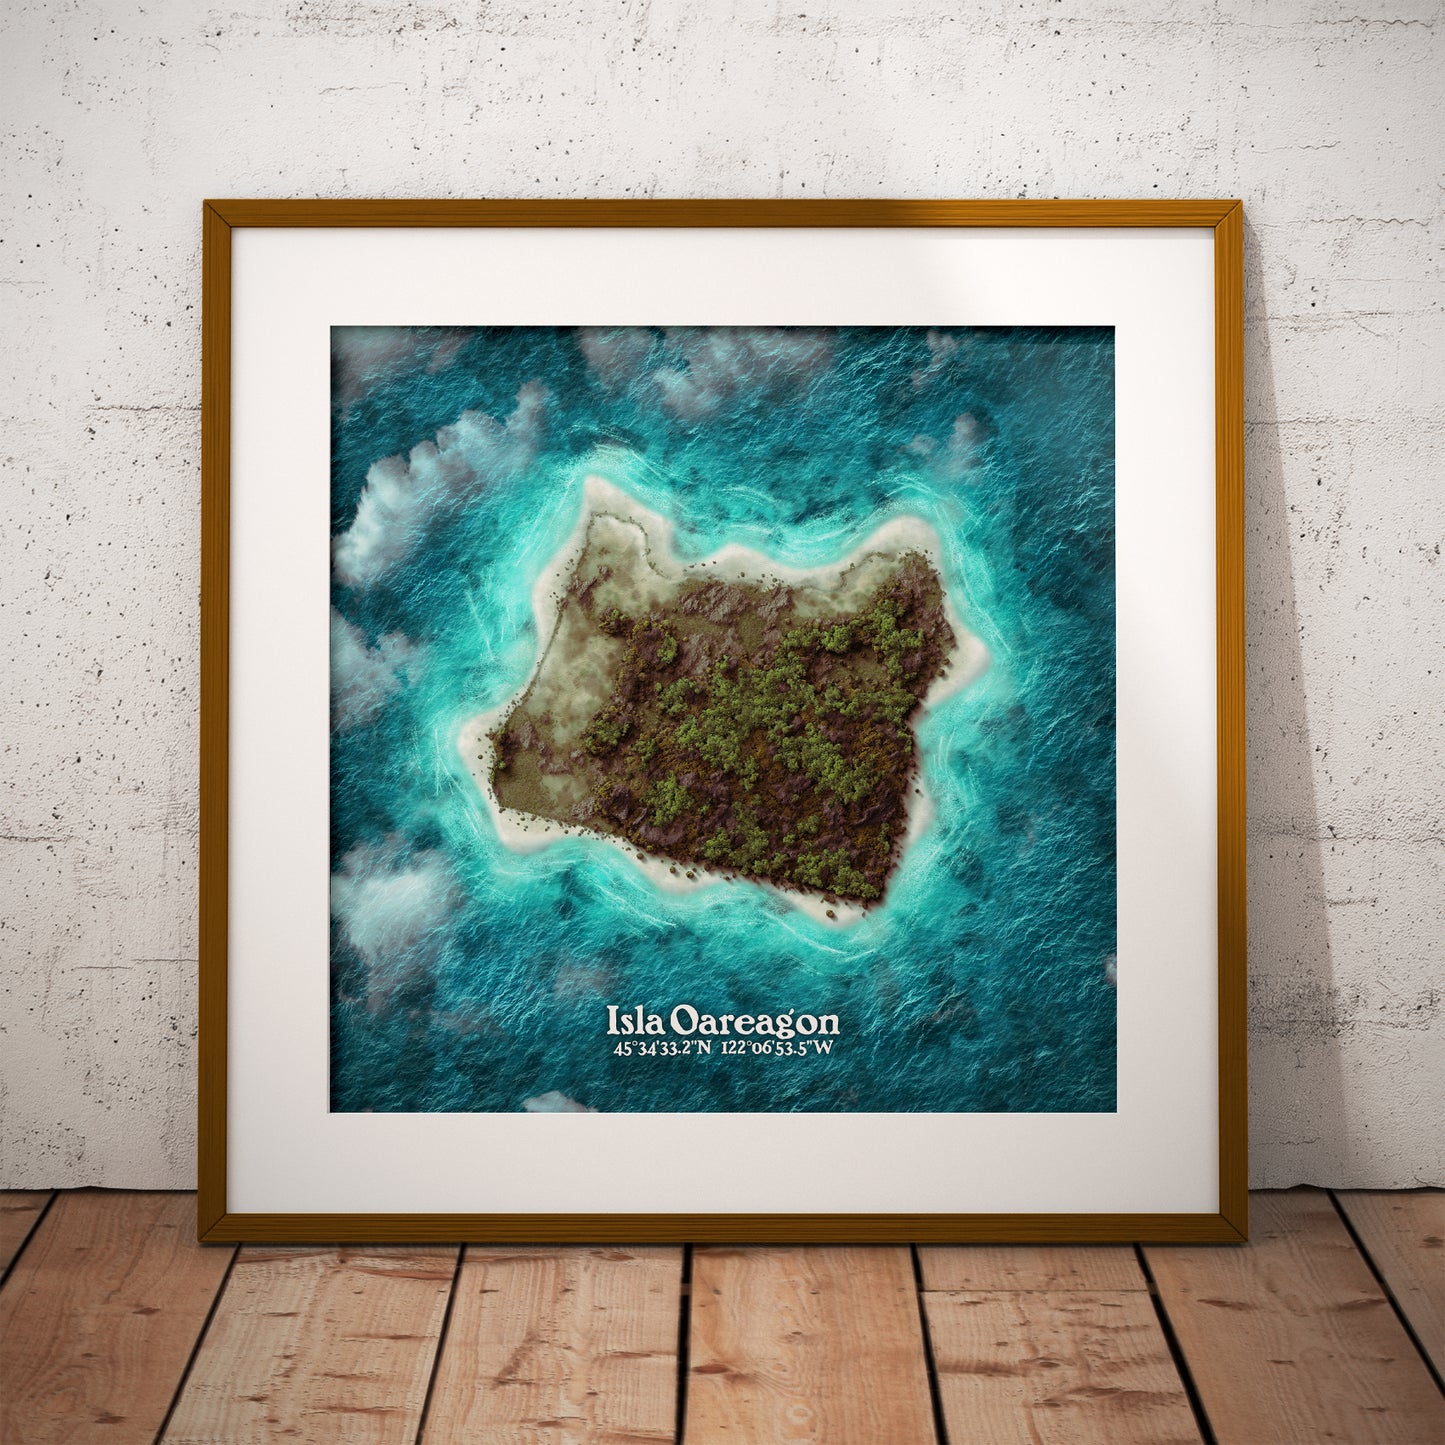 Oregan state as an island print (Isla Oareagon). Novelty art - Imagine your state as a desert island.